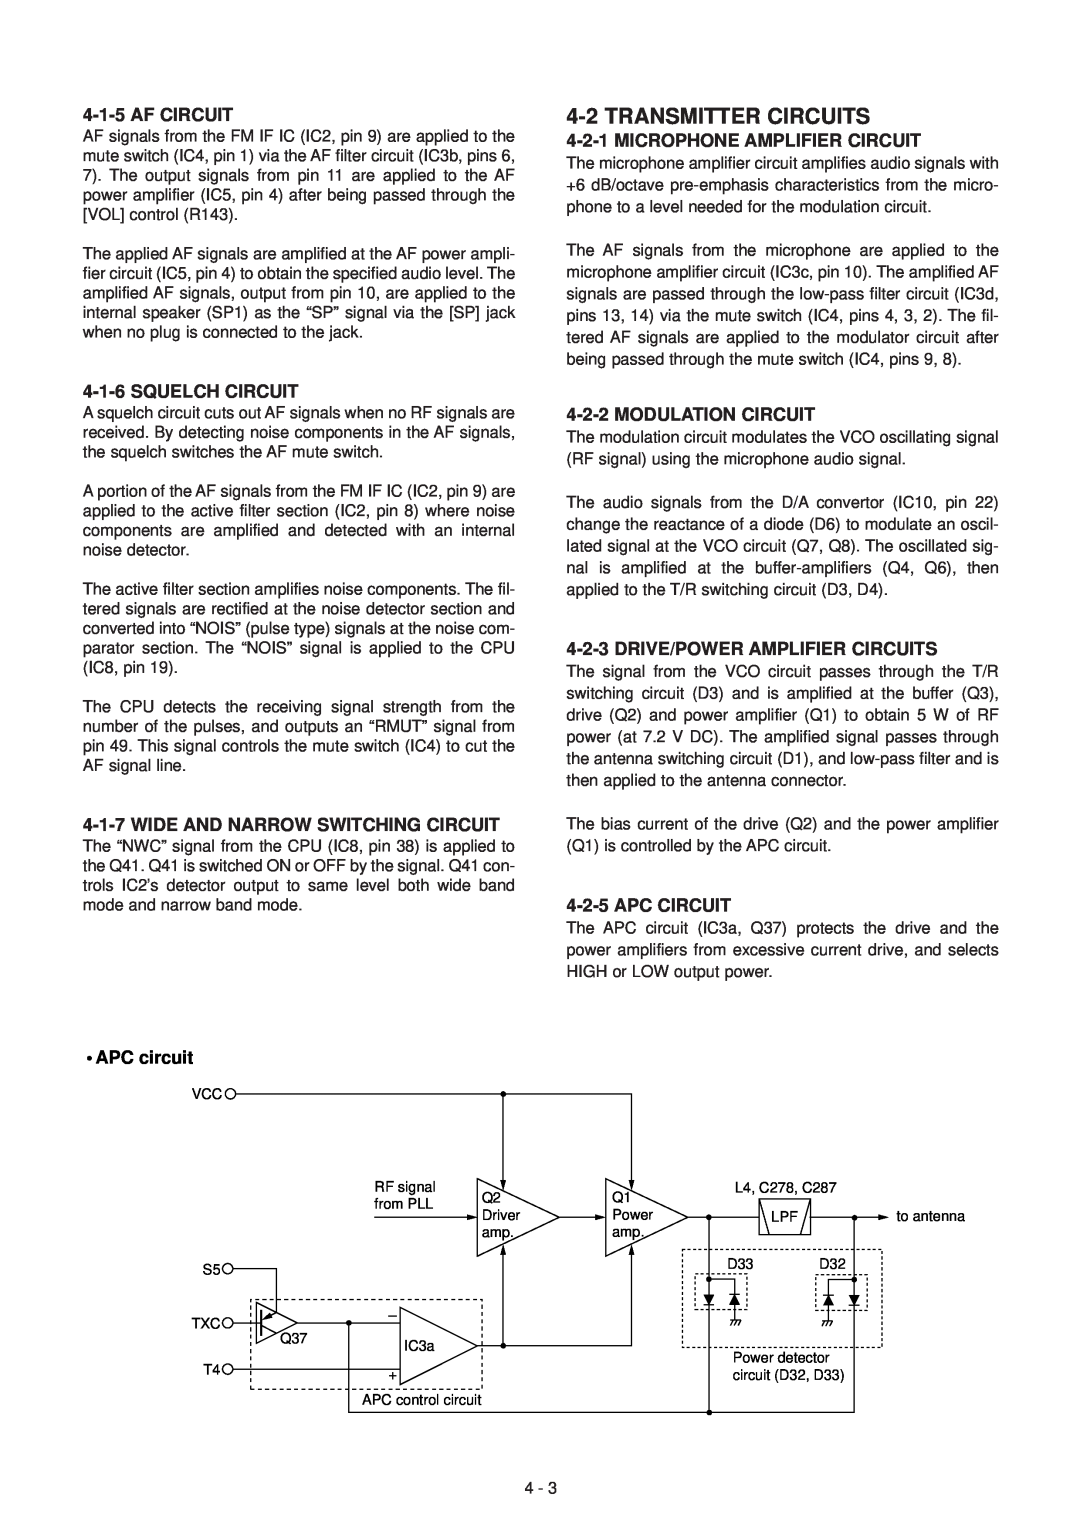 Icom IC-F3GT Transmitter Circuits, Af Circuit, Microphone Amplifier Circuit, Squelch Circuit, APC circuit, Apc Circuit 